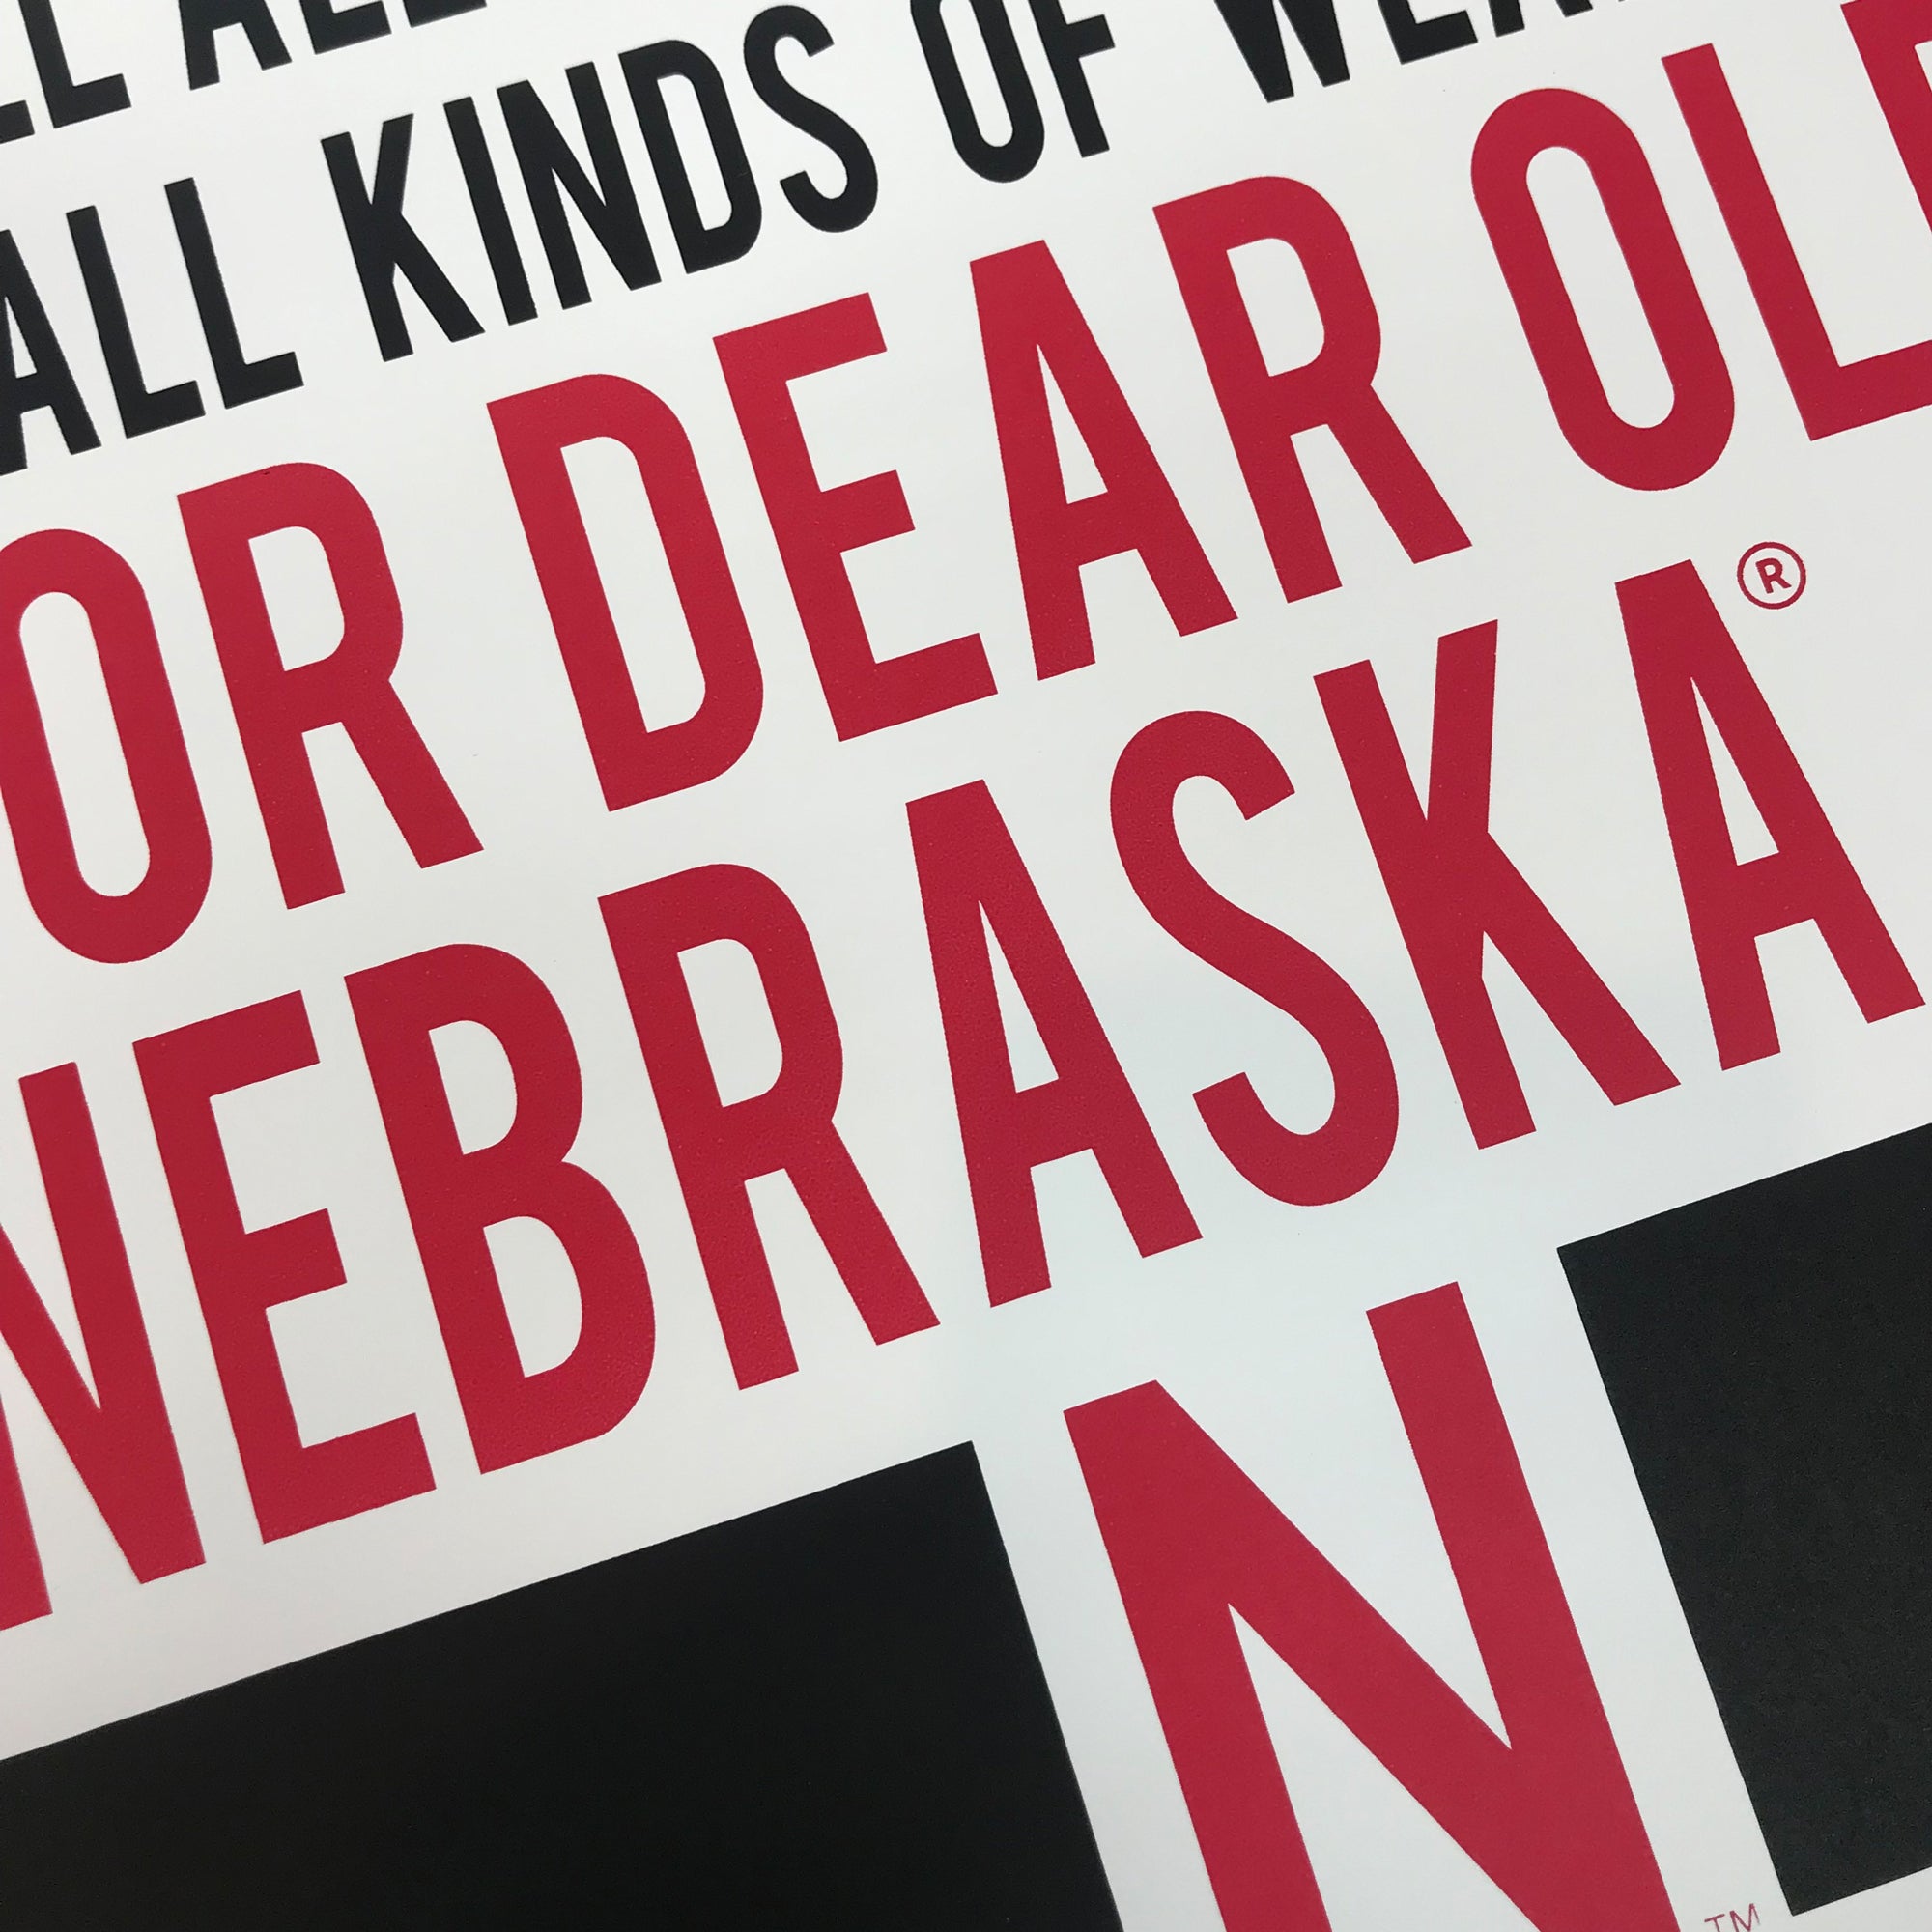 Limited Edition Nebraska Cornhuskers Script Logo Poster Art - 13x19